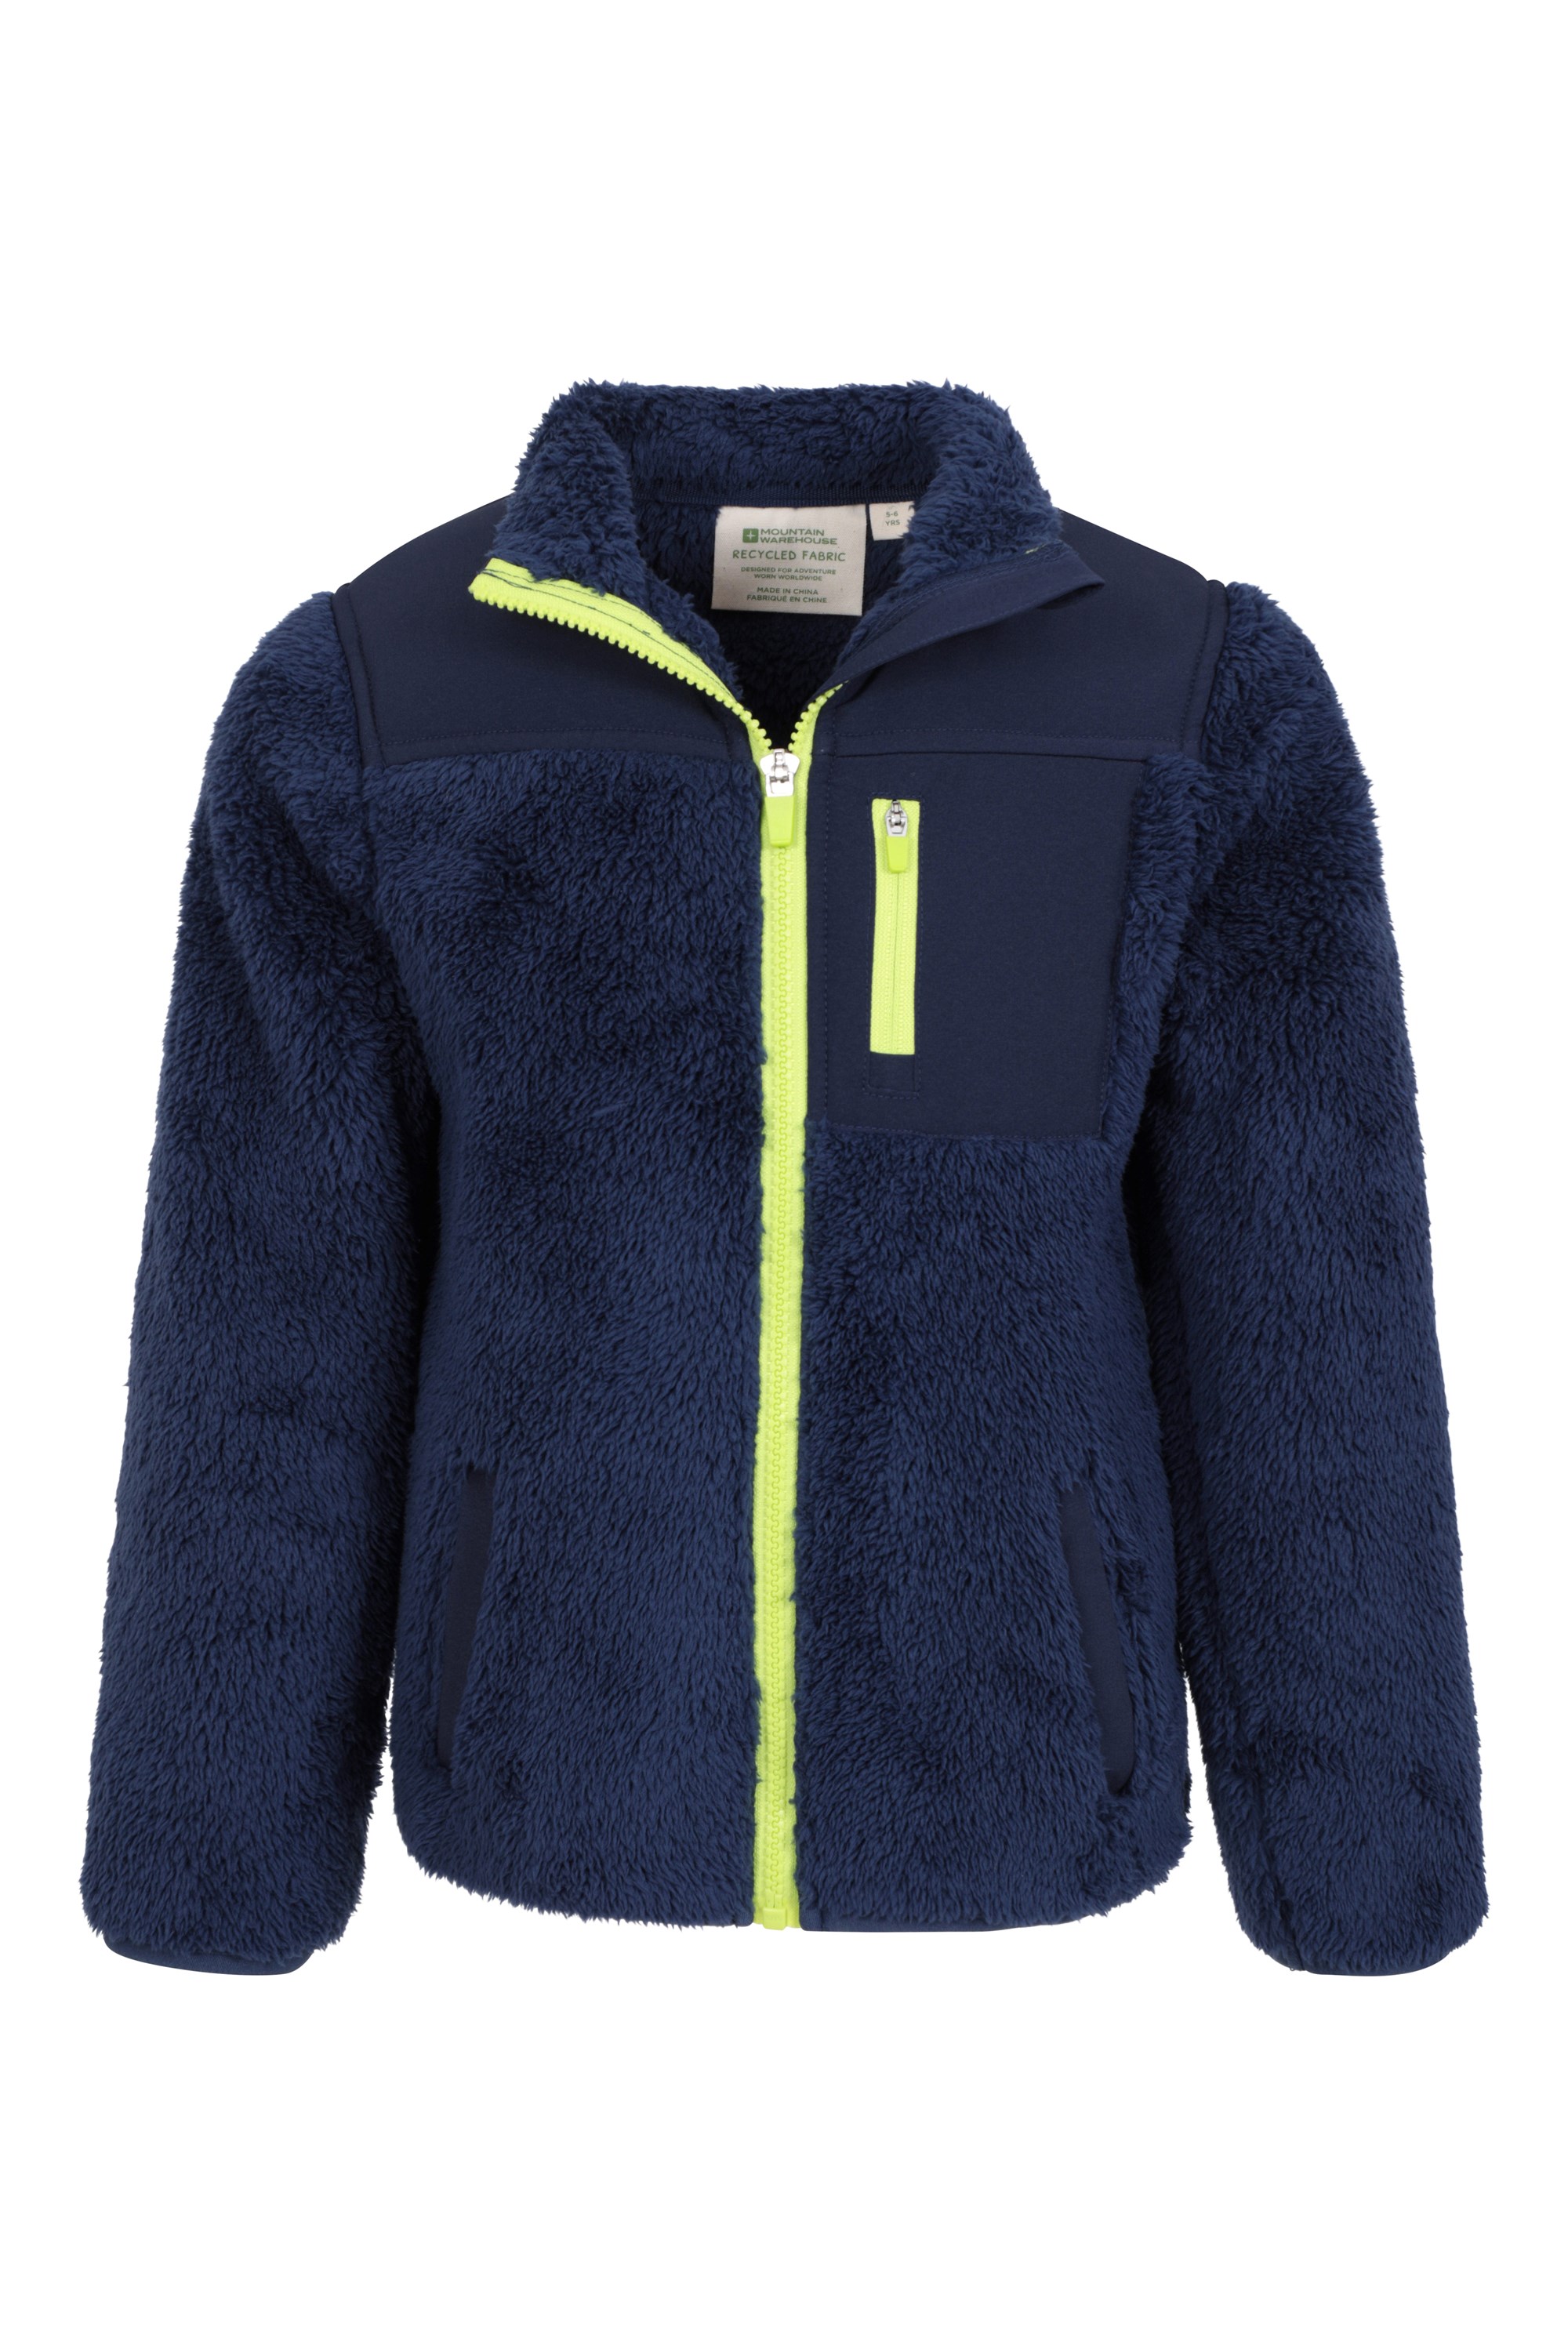 Mountain Warehouse Atlas Kids Borg Fleece Jacket Boys Girls Warm Full Zip  Coat 